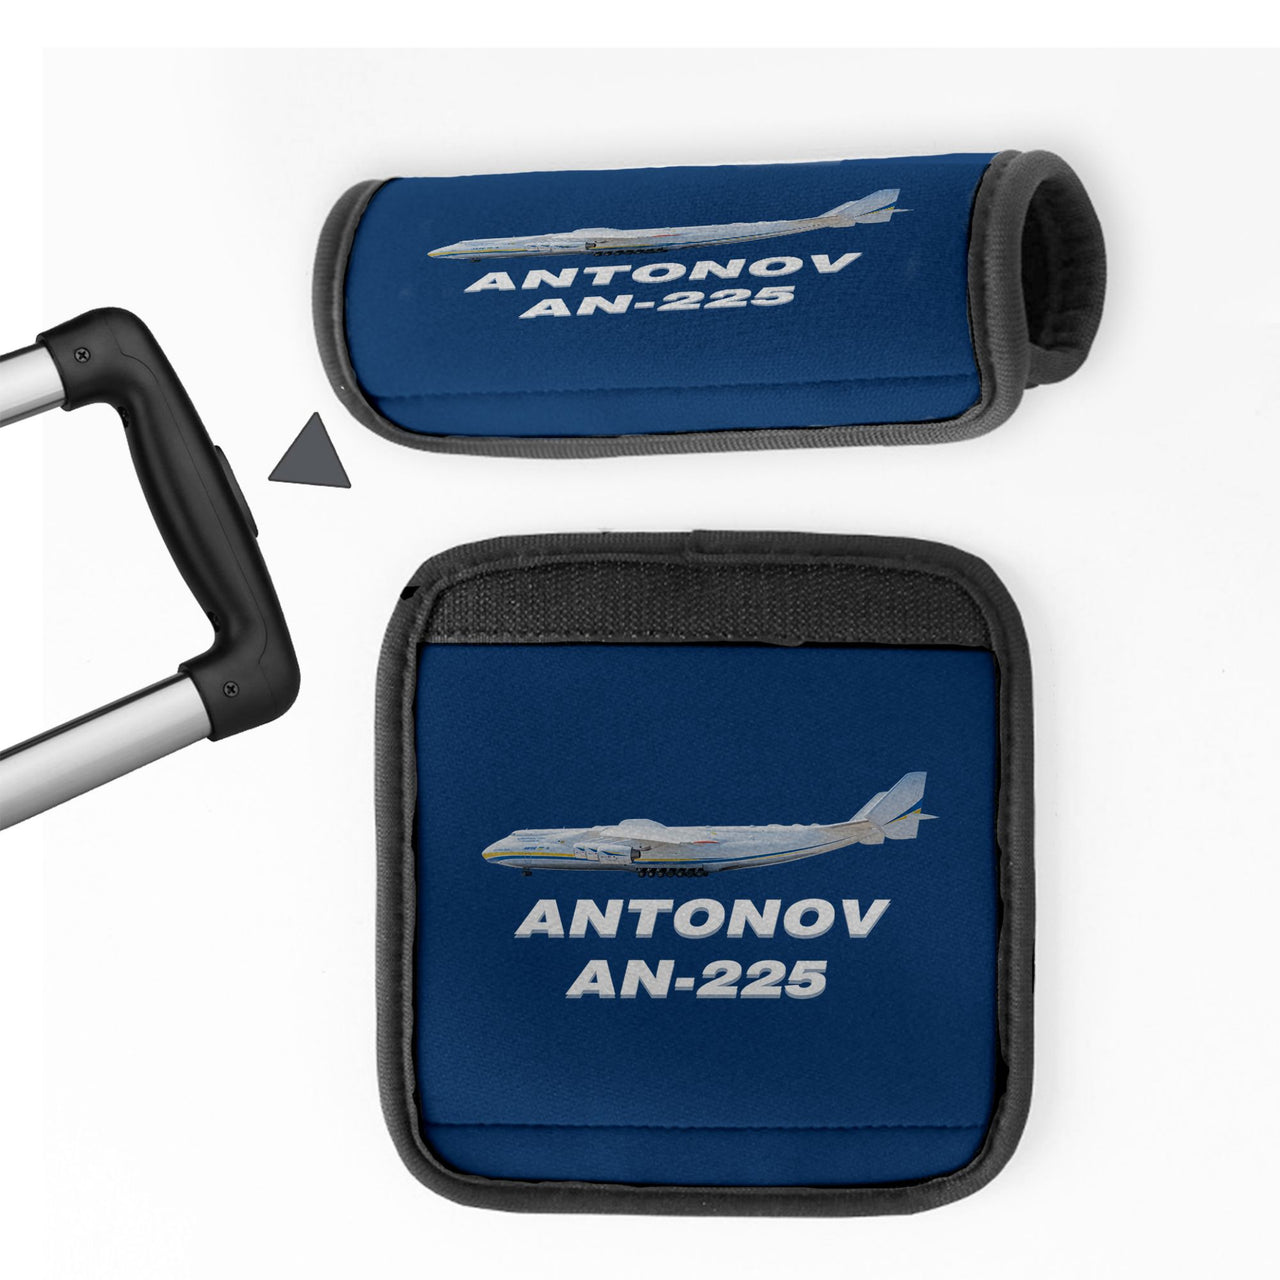 The Antonov AN-225 Designed Neoprene Luggage Handle Covers